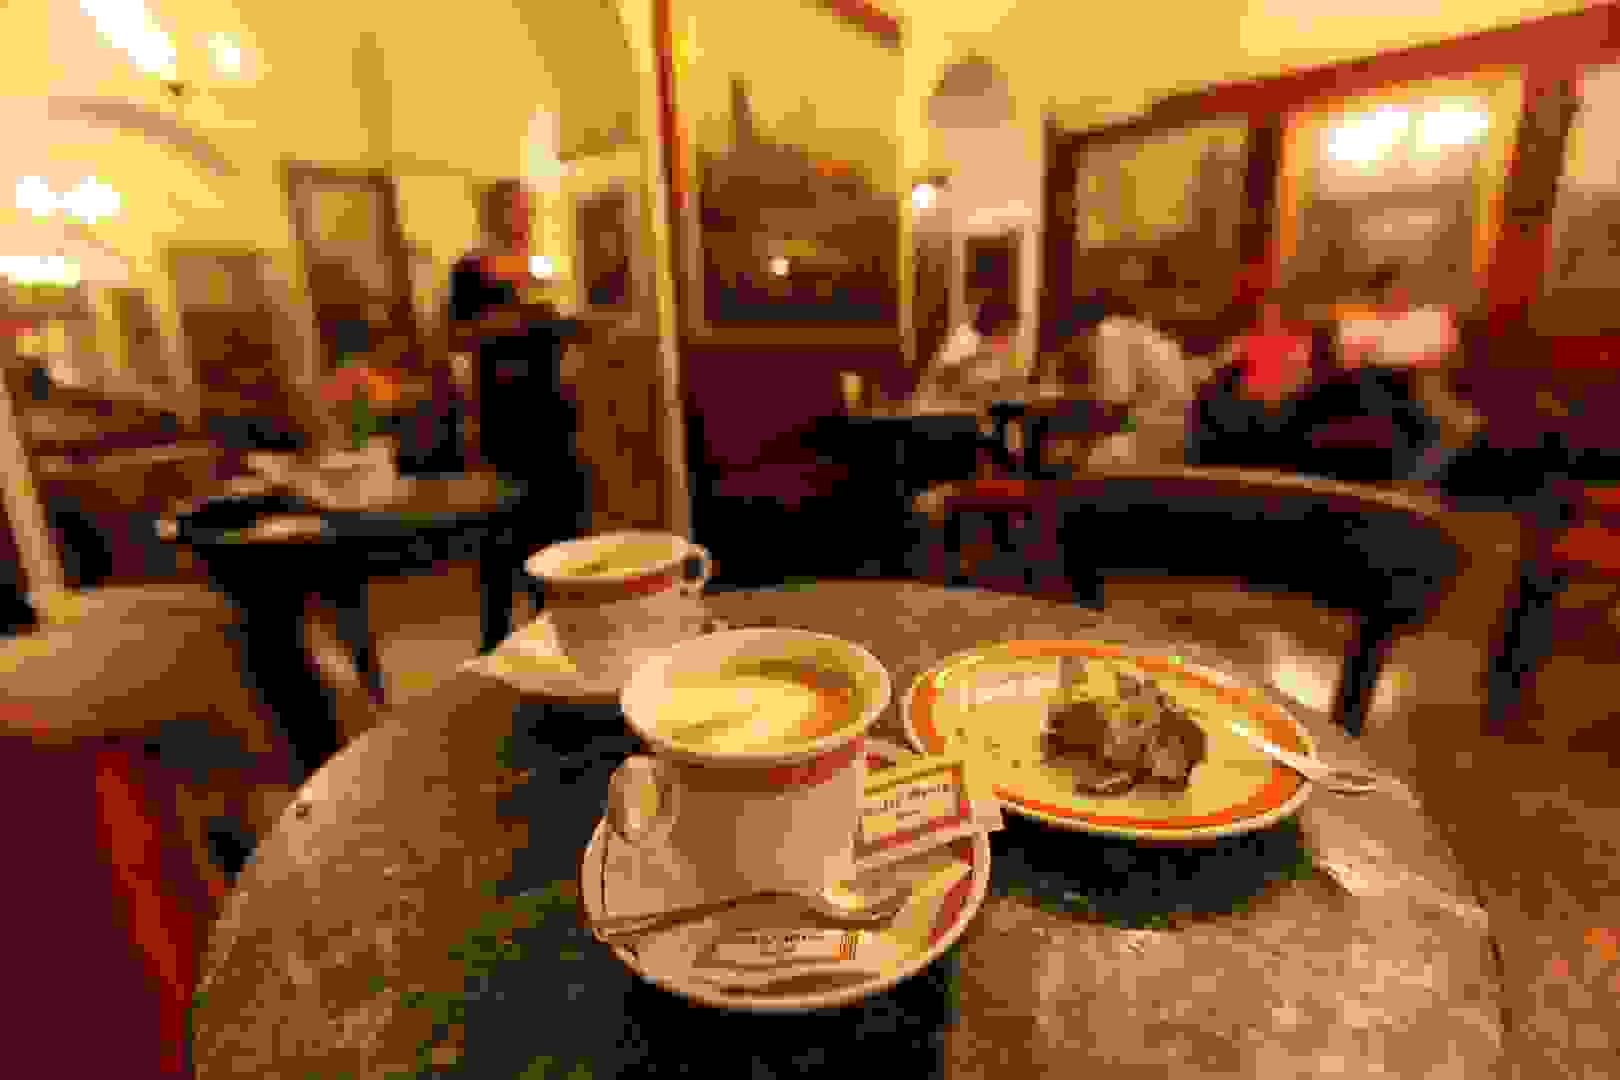 caffe-greco10.jpg